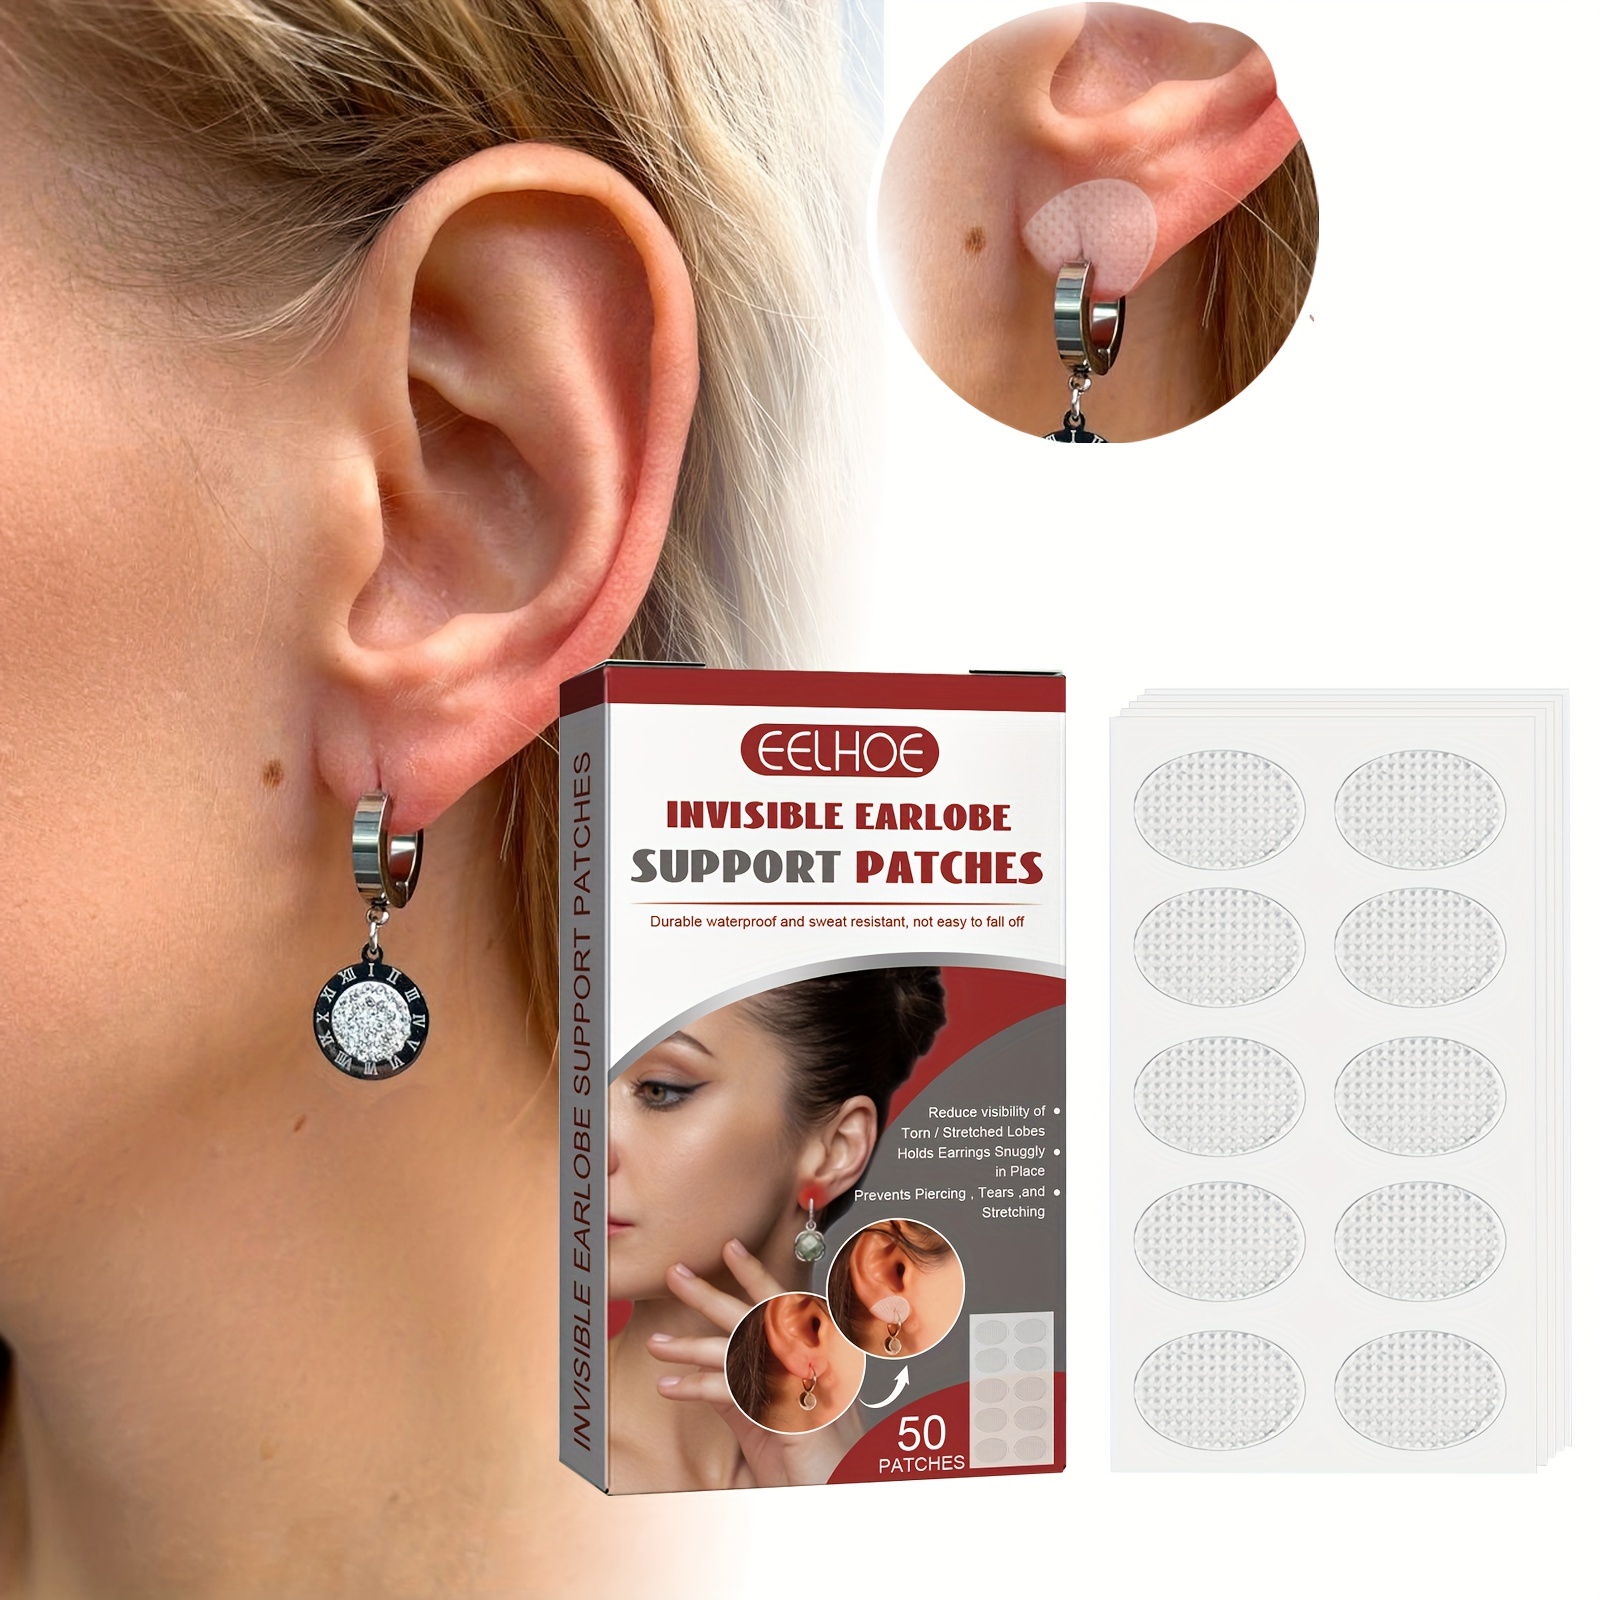 Ear Bob Earring Stoppers Silicone Back Earrings Stoppers Jewelry Findings  100pcs 